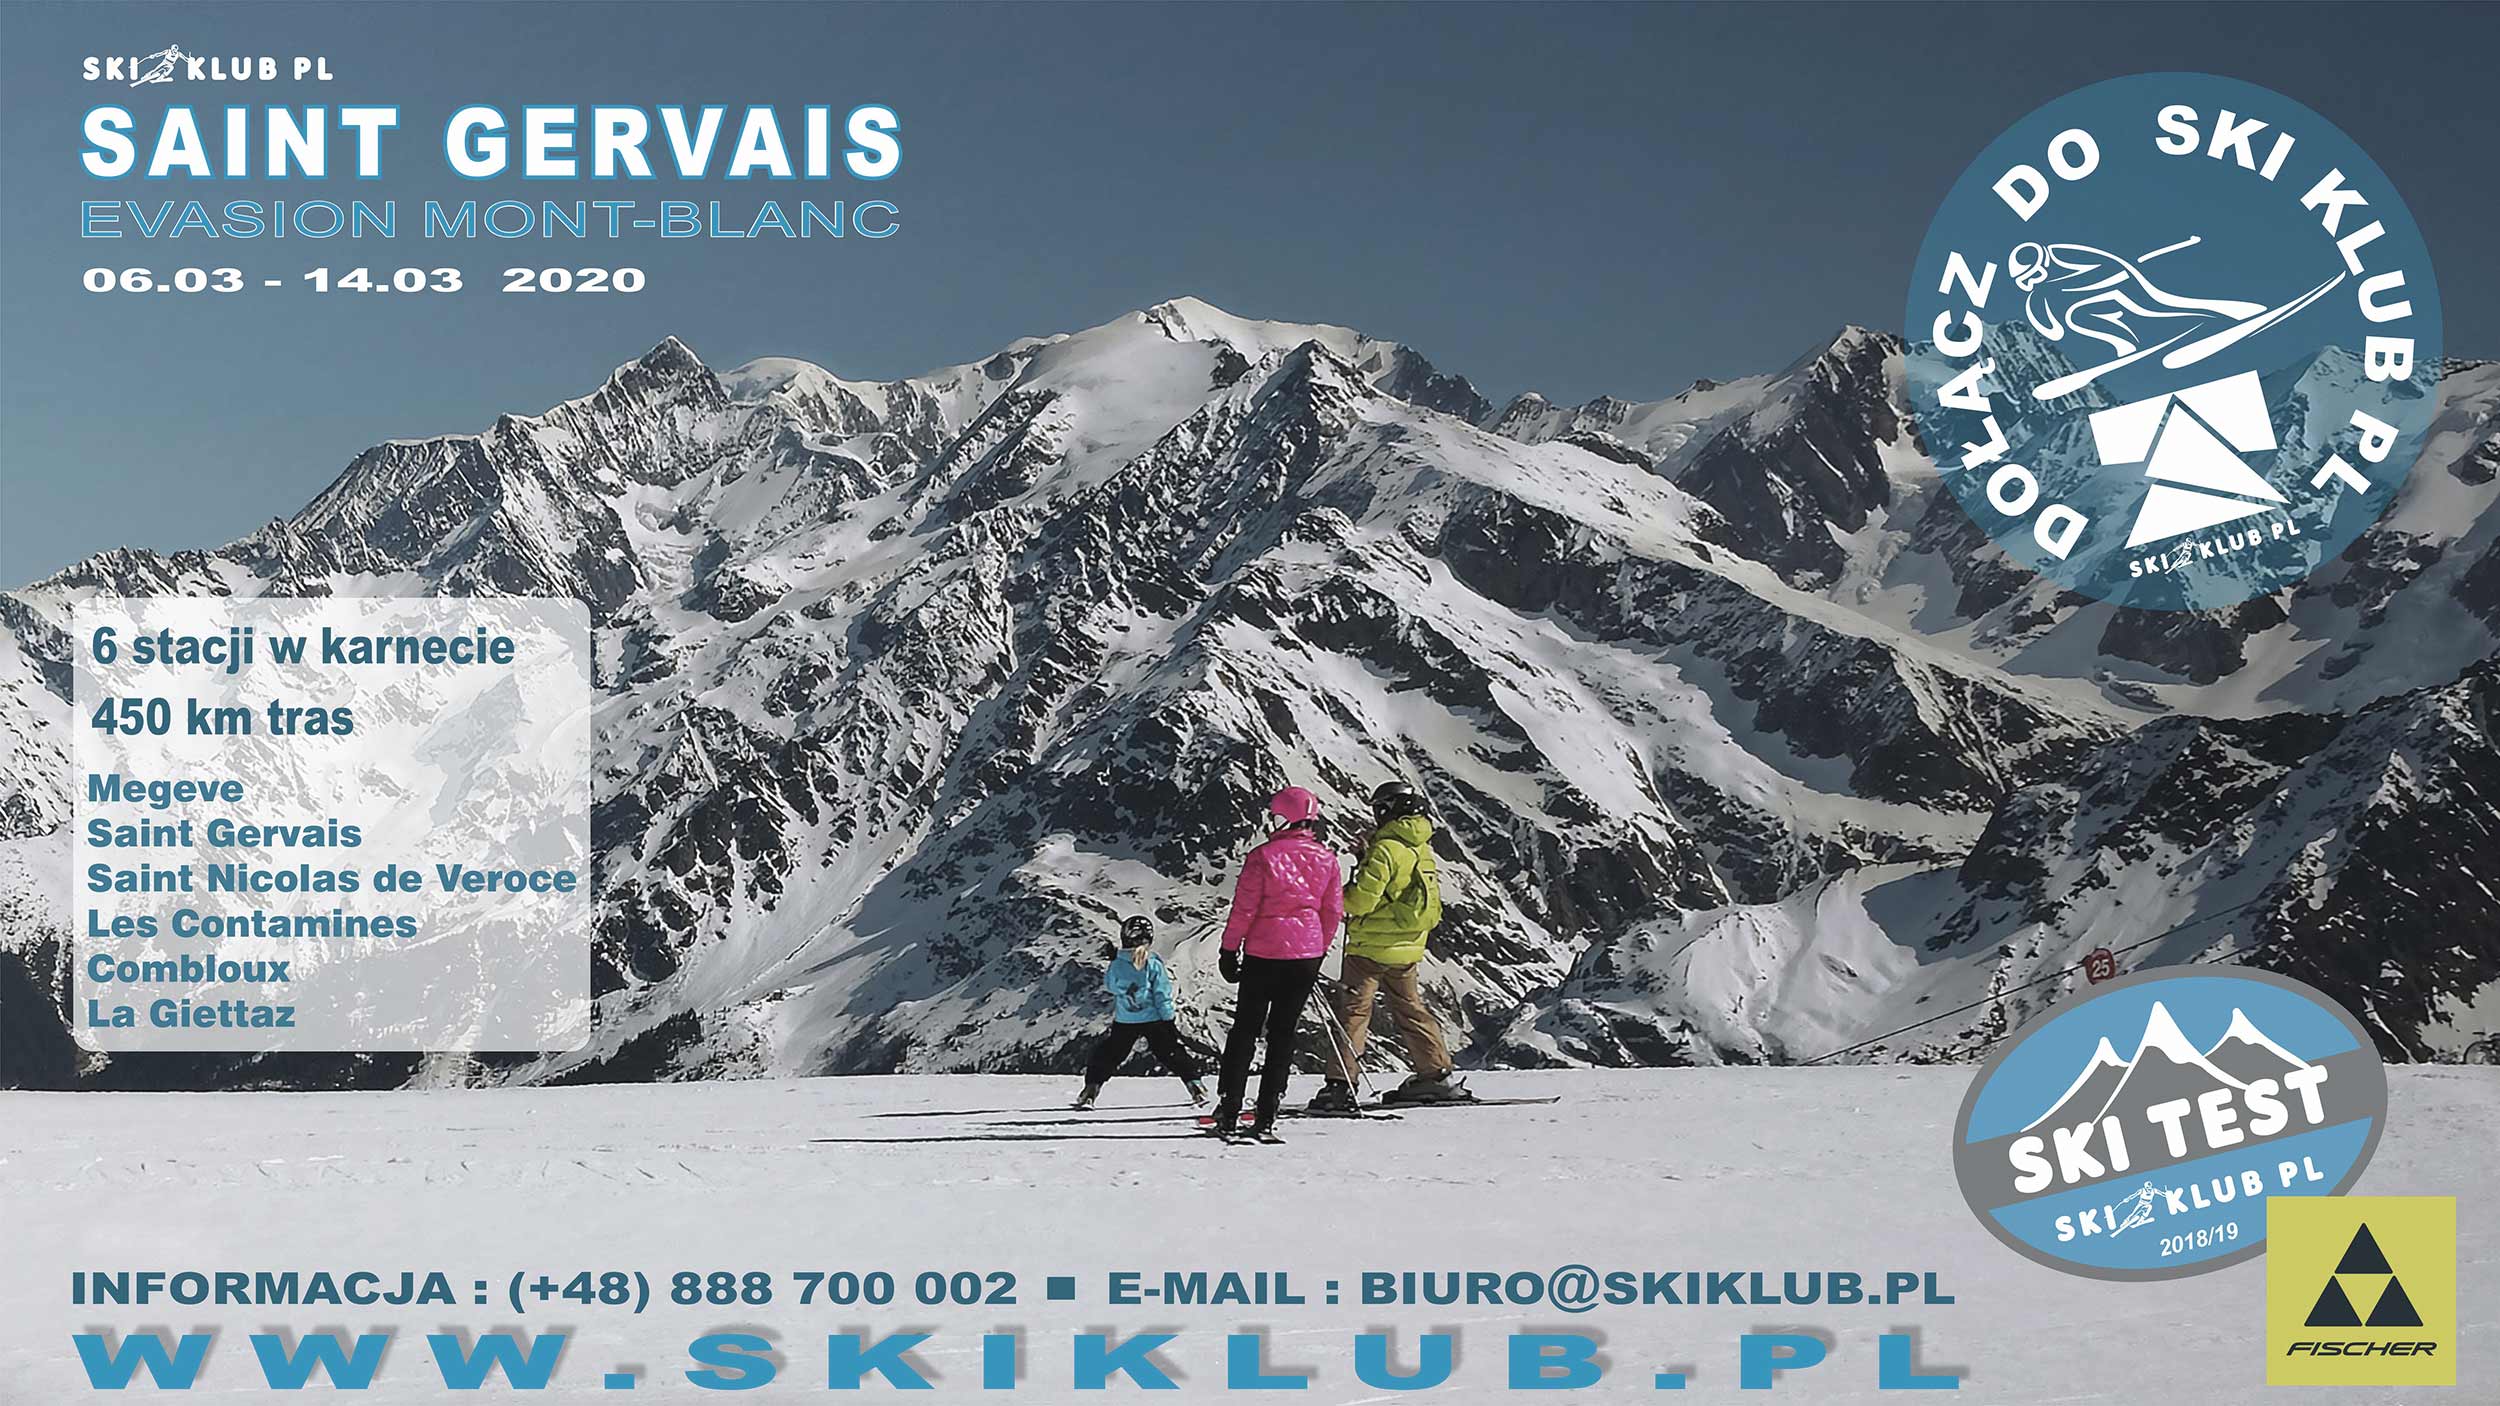 St.-Gervais-Mont-Blanc-2020-SKI-KLUB-PL